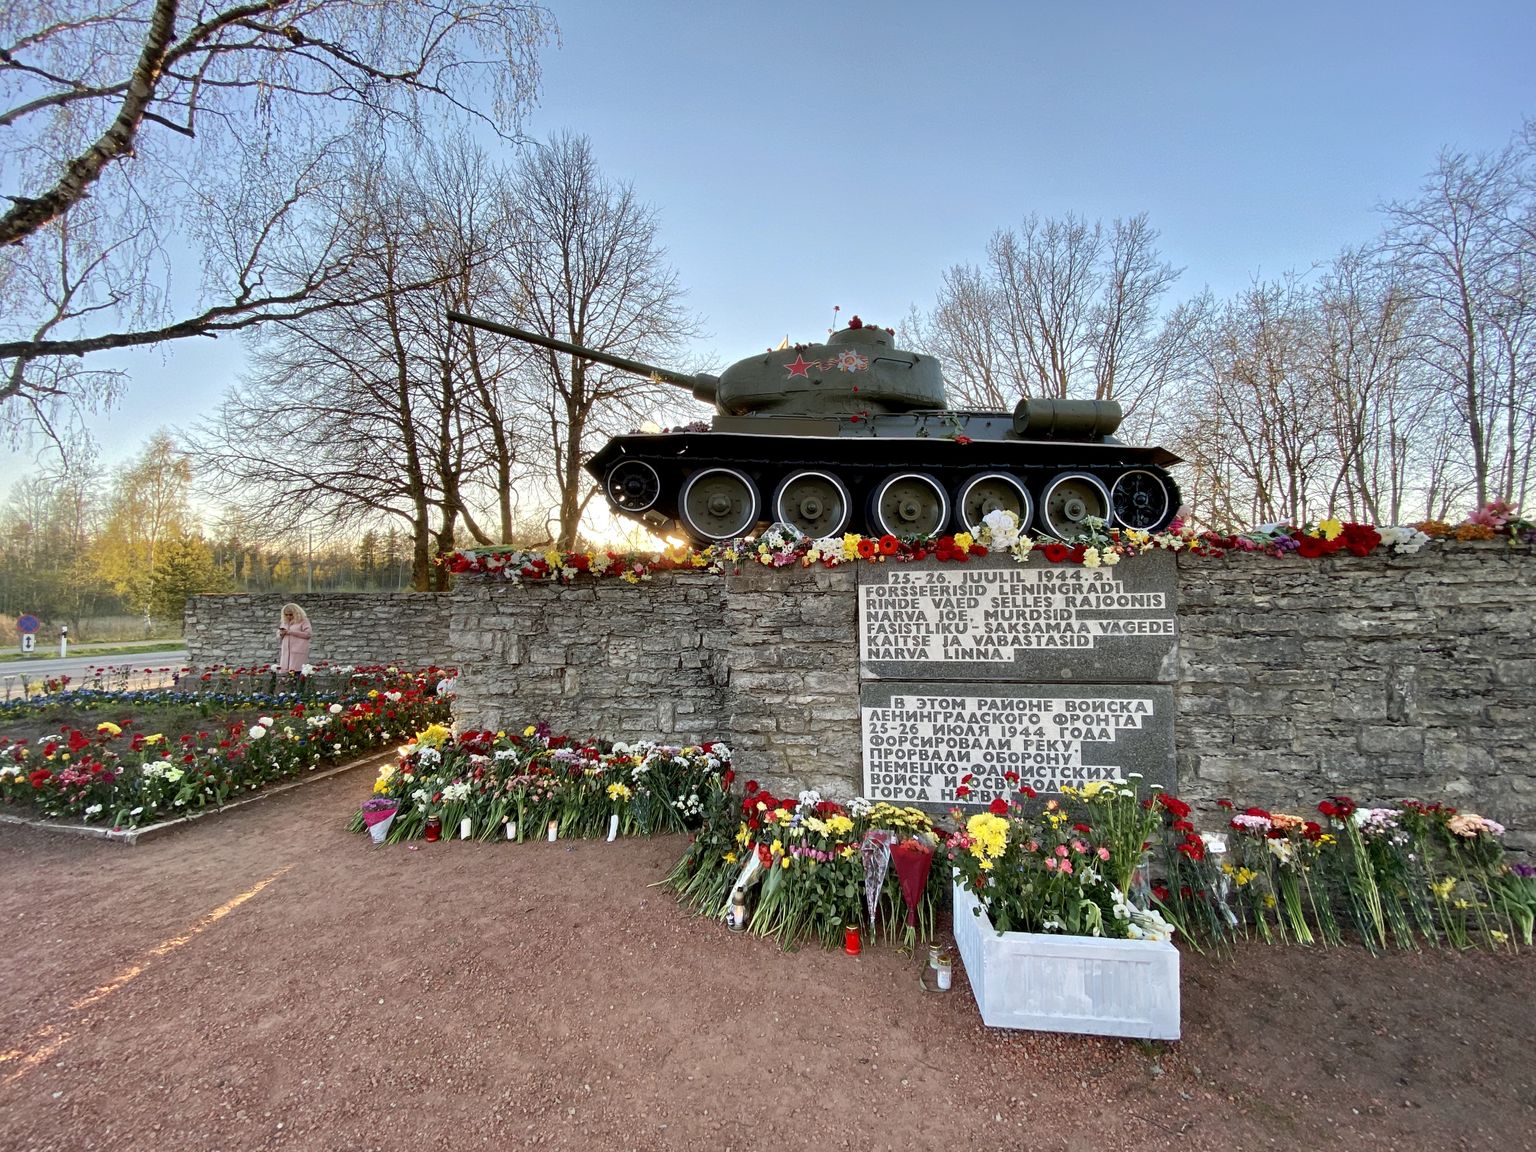 Нарвский монумент "Танк Т-34".